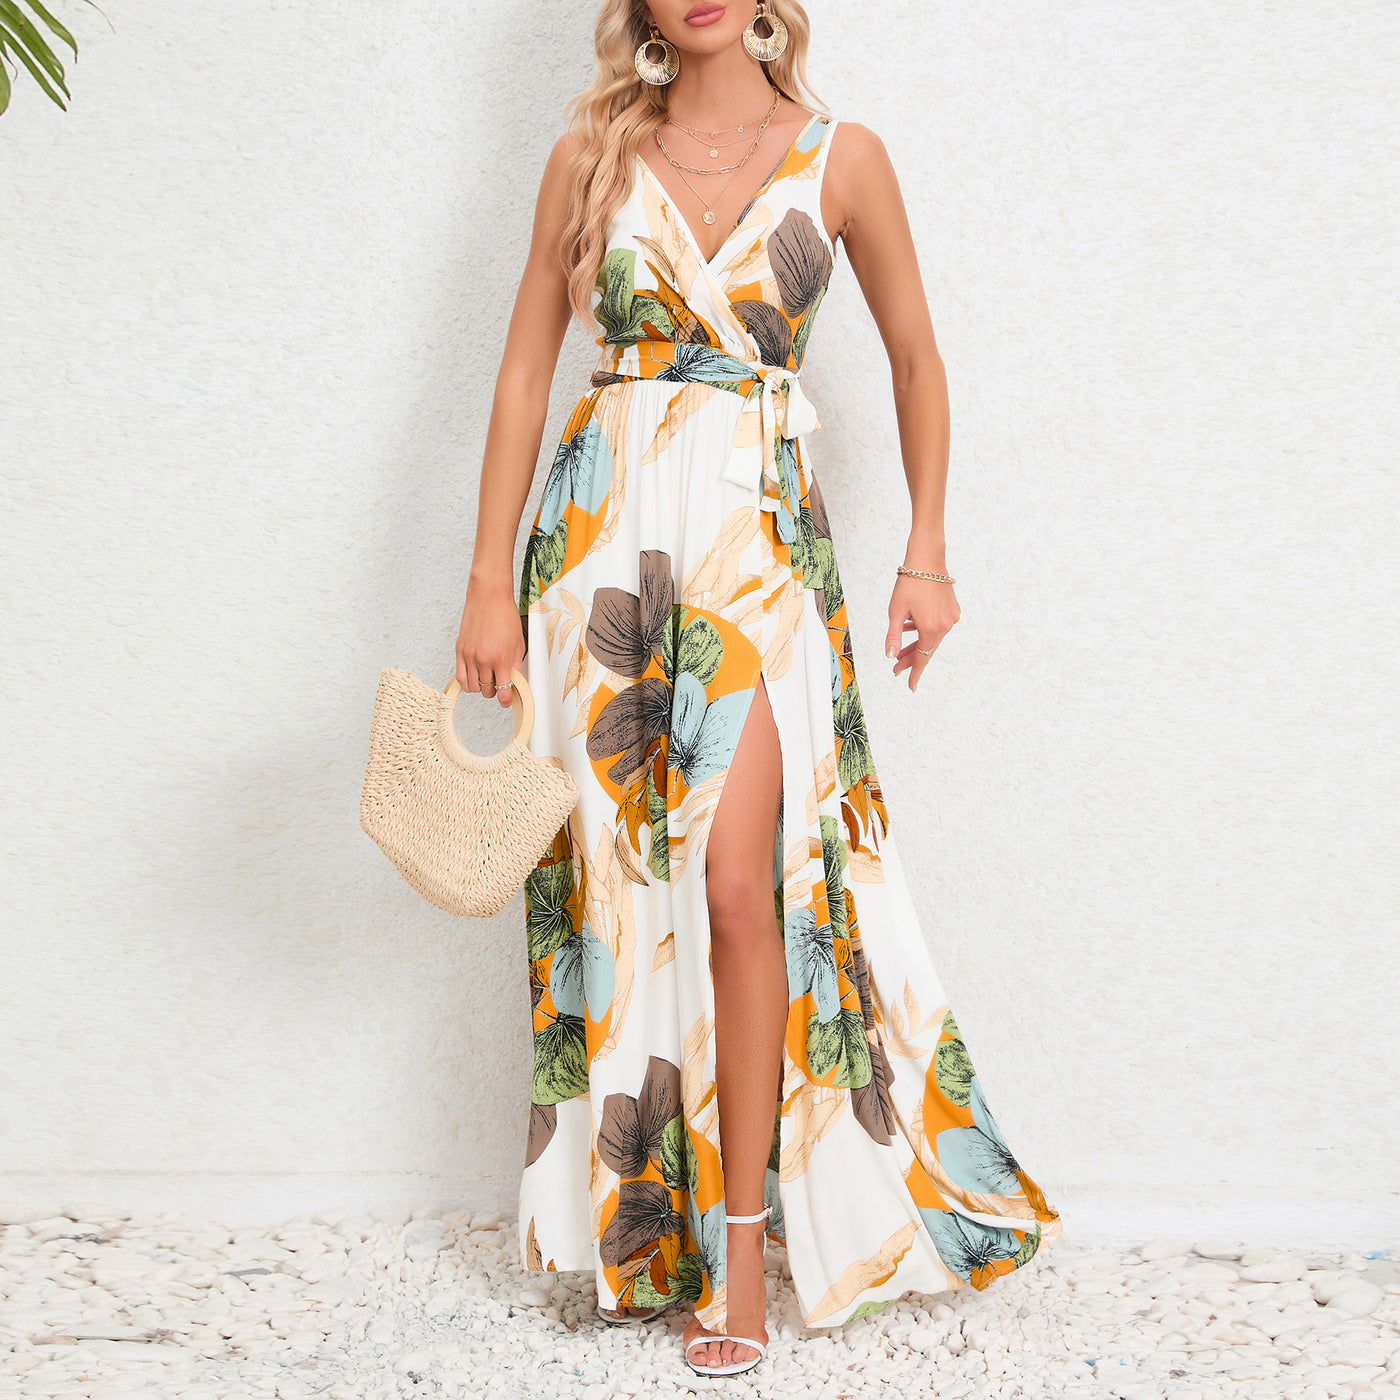 Women's Long Dress Floral Print  V-neck Summer Sleeveless Dress - Carvan Mart